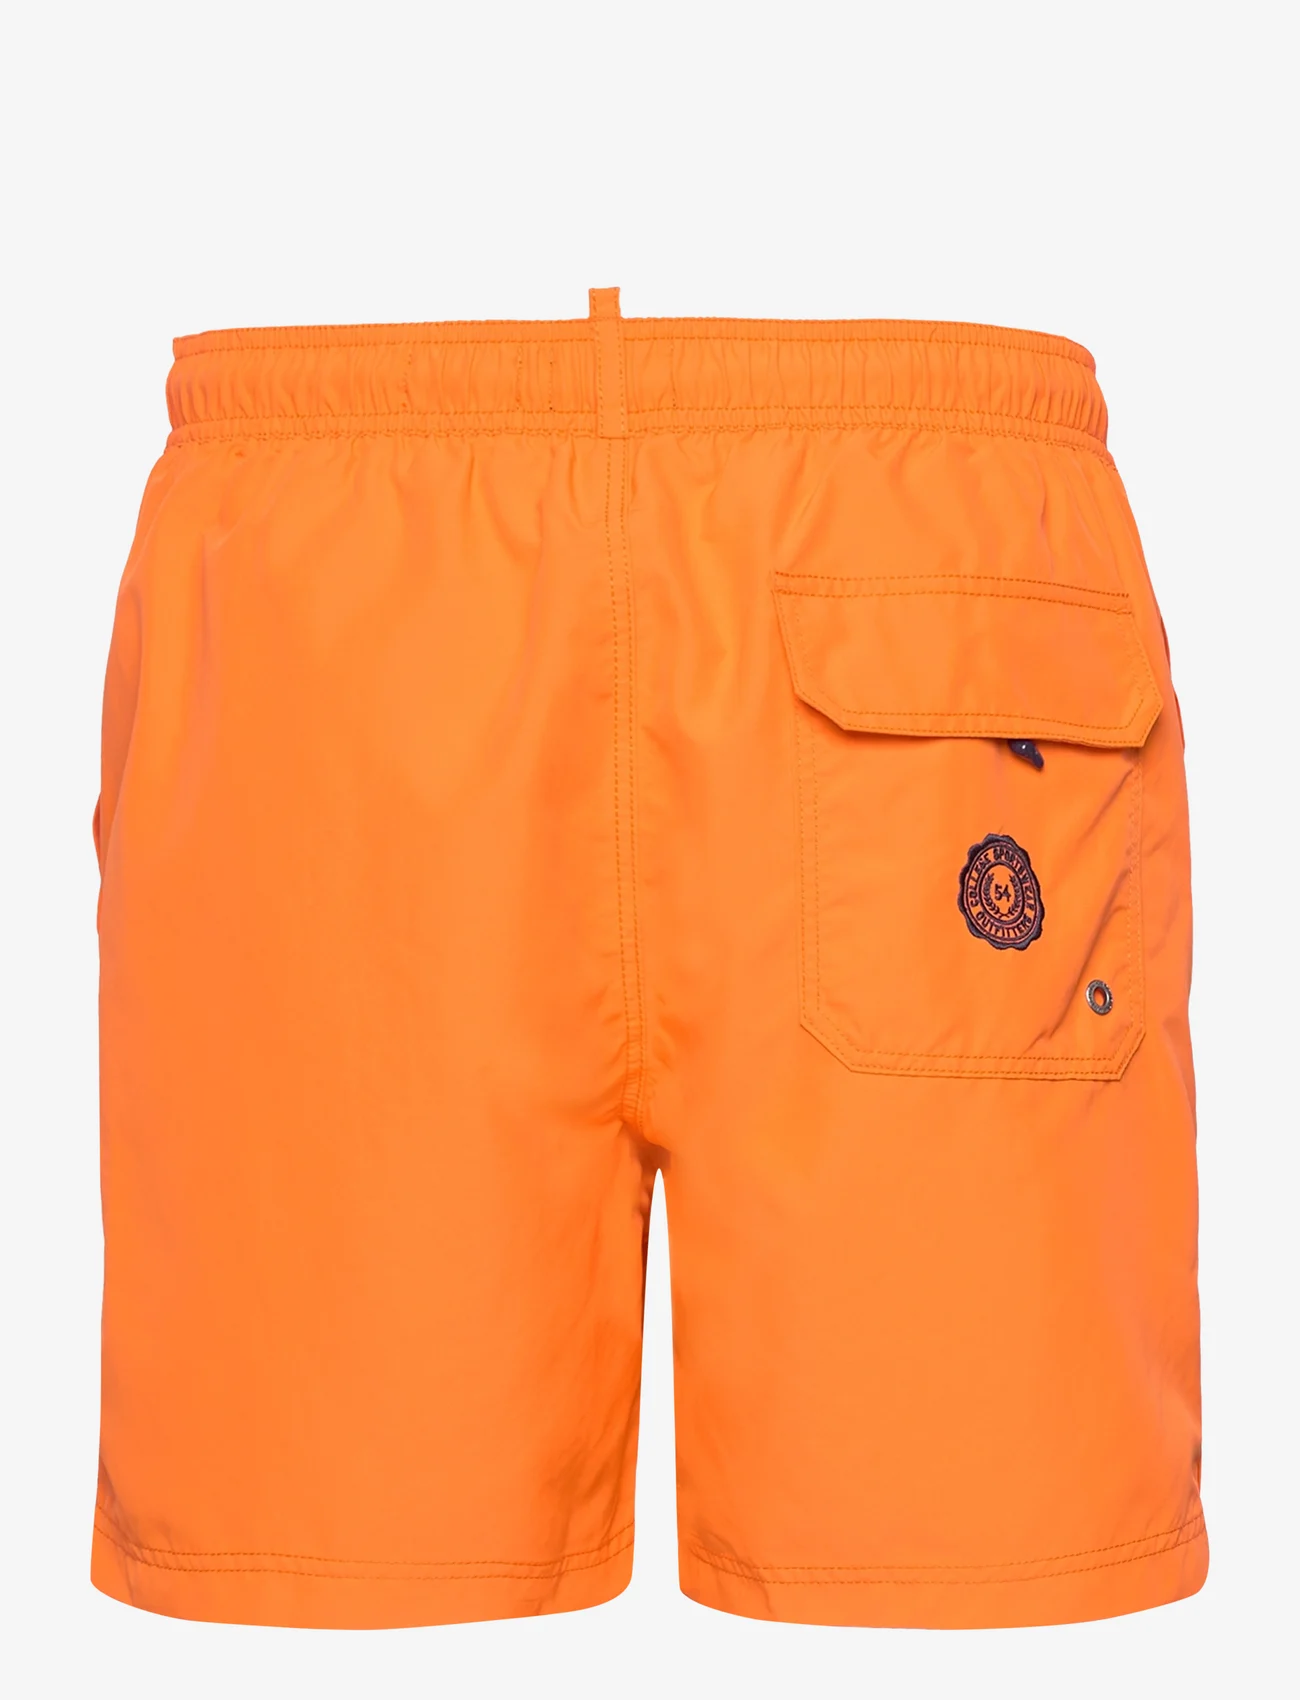 Superdry - VINTAGE POLO SWIMSHORT - swim shorts - denver orange - 1